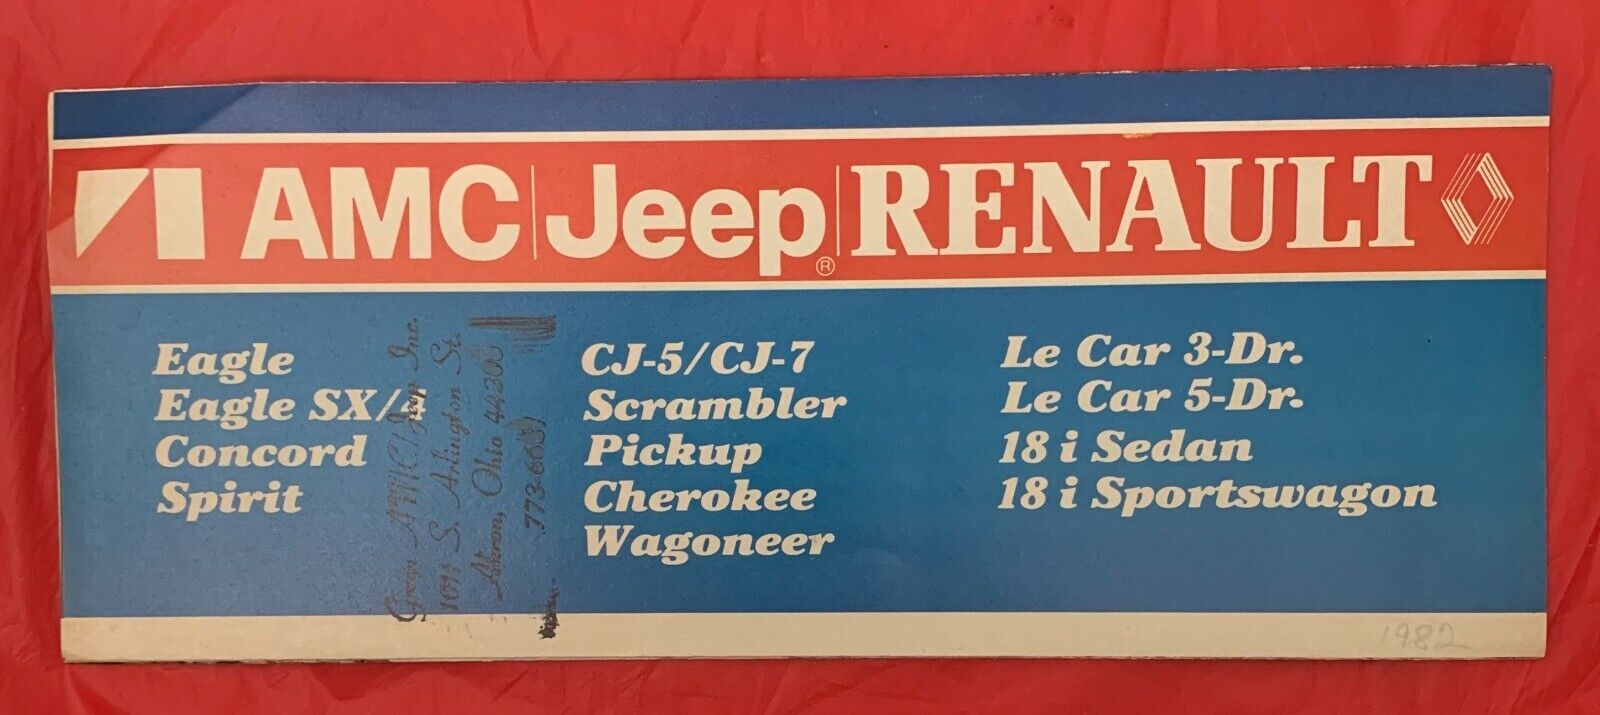 1982 AMC / JEEP / RENAULT - Original Car Dealer Sales Brochure / Catalog